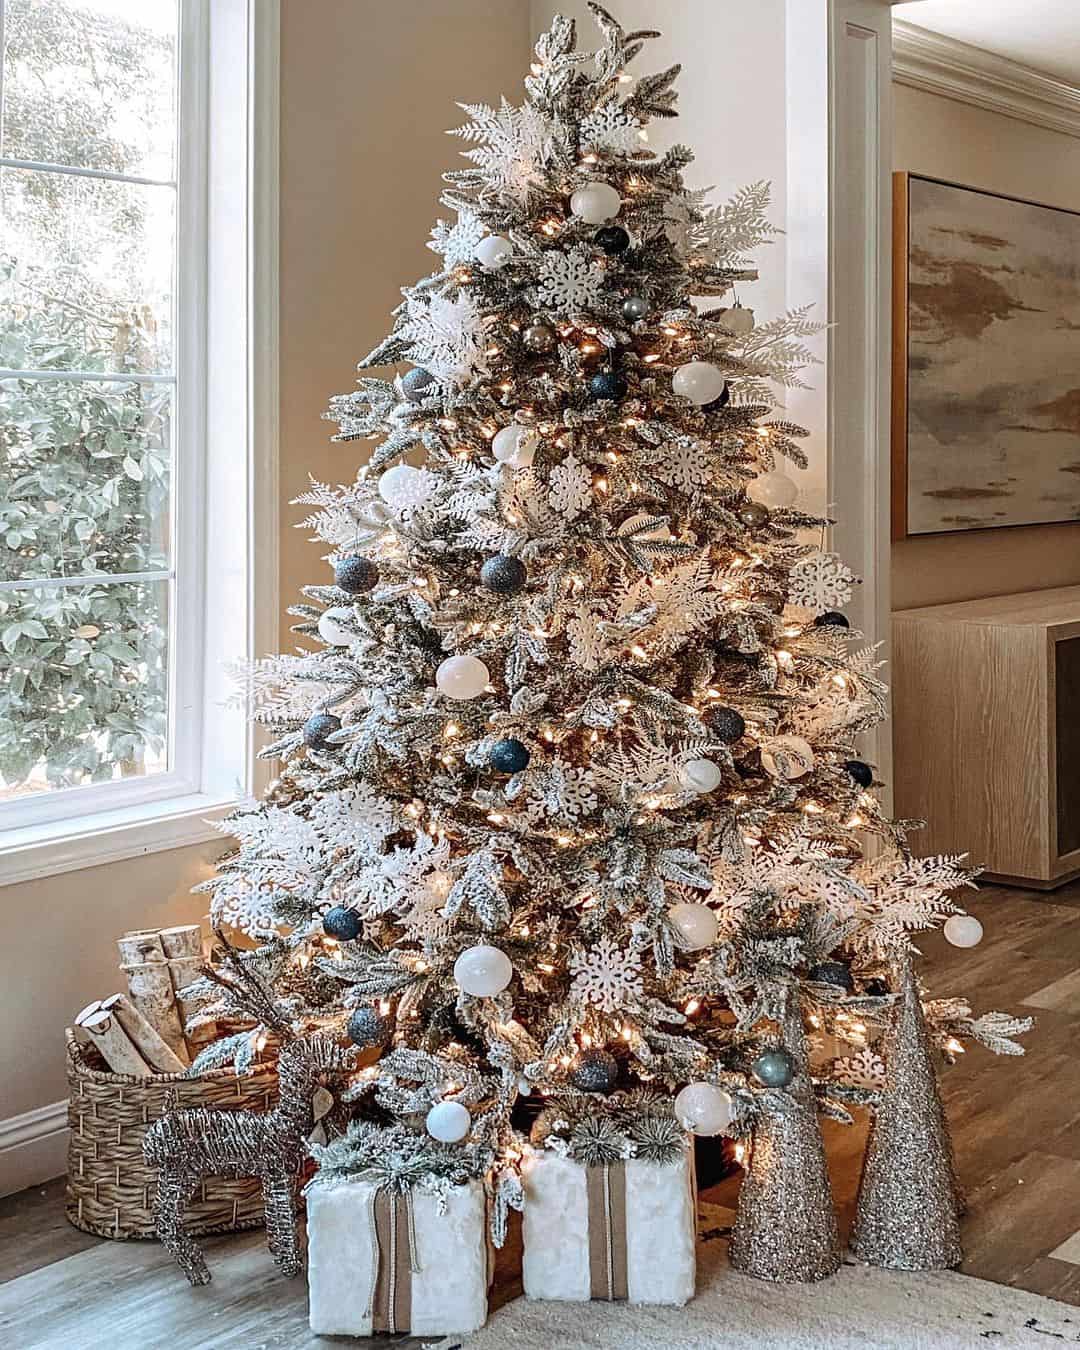 47 Black Christmas Tree Decorations to Modernize Your Décor